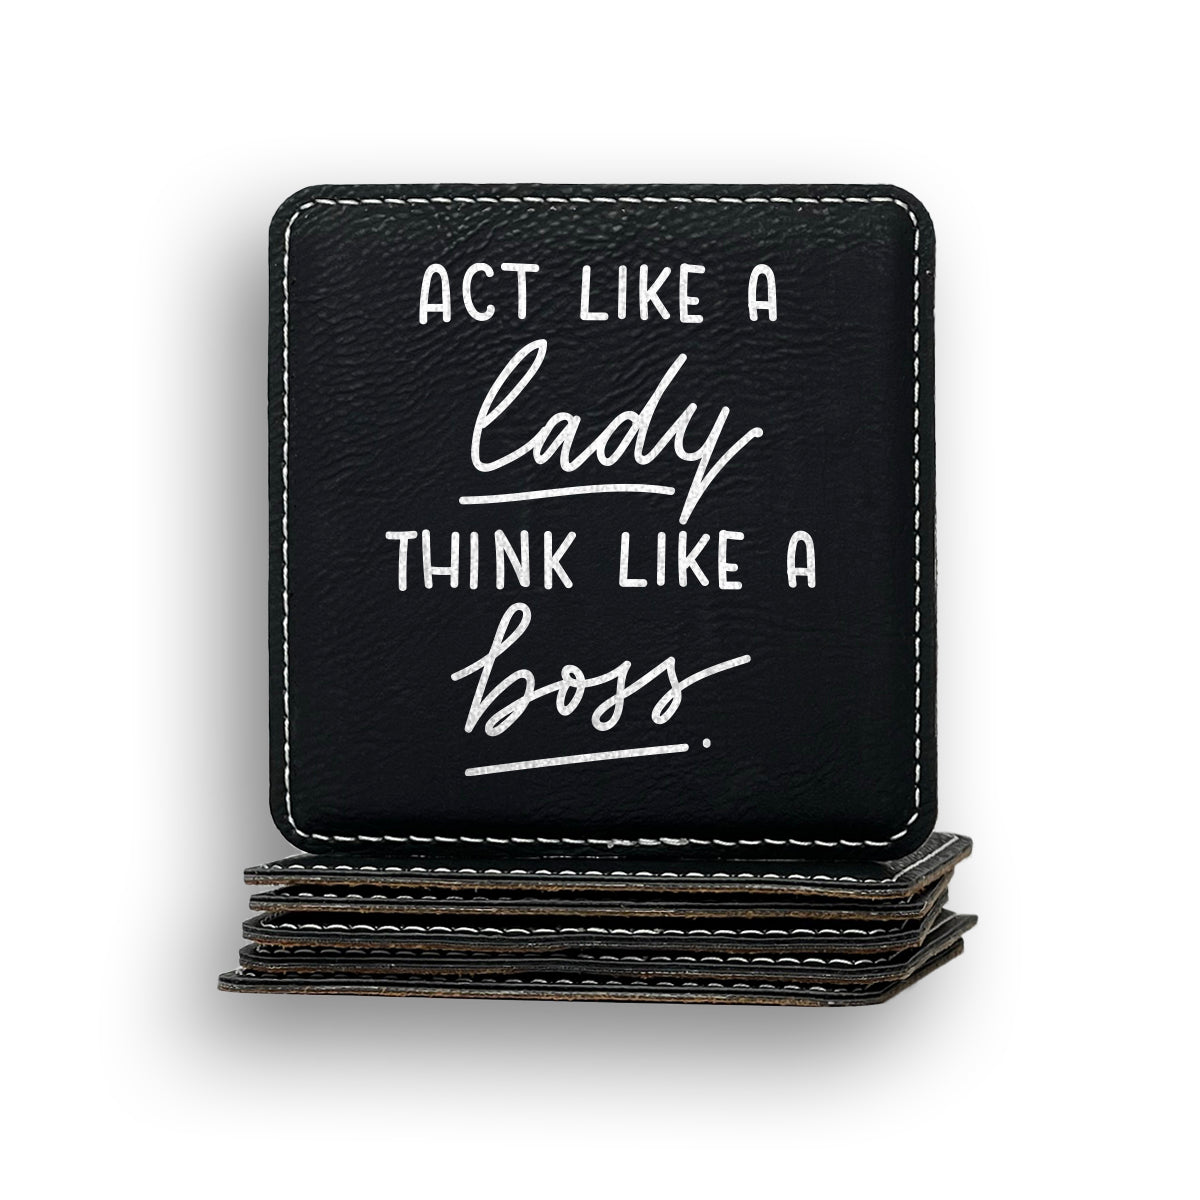 Act Lady Think Boss Coaster